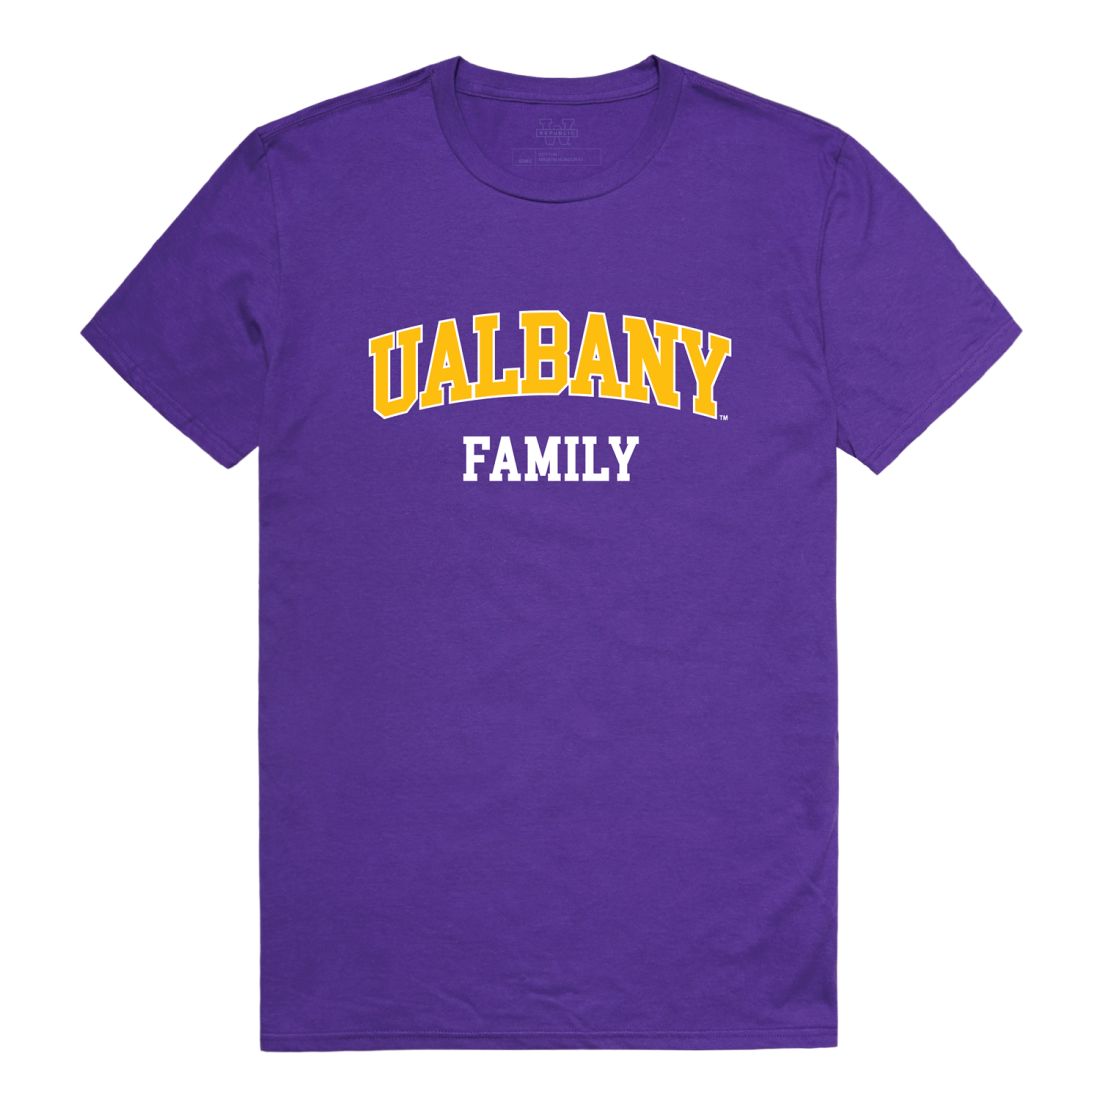 UAlbany University of Albany The Great Danes Family T-Shirt